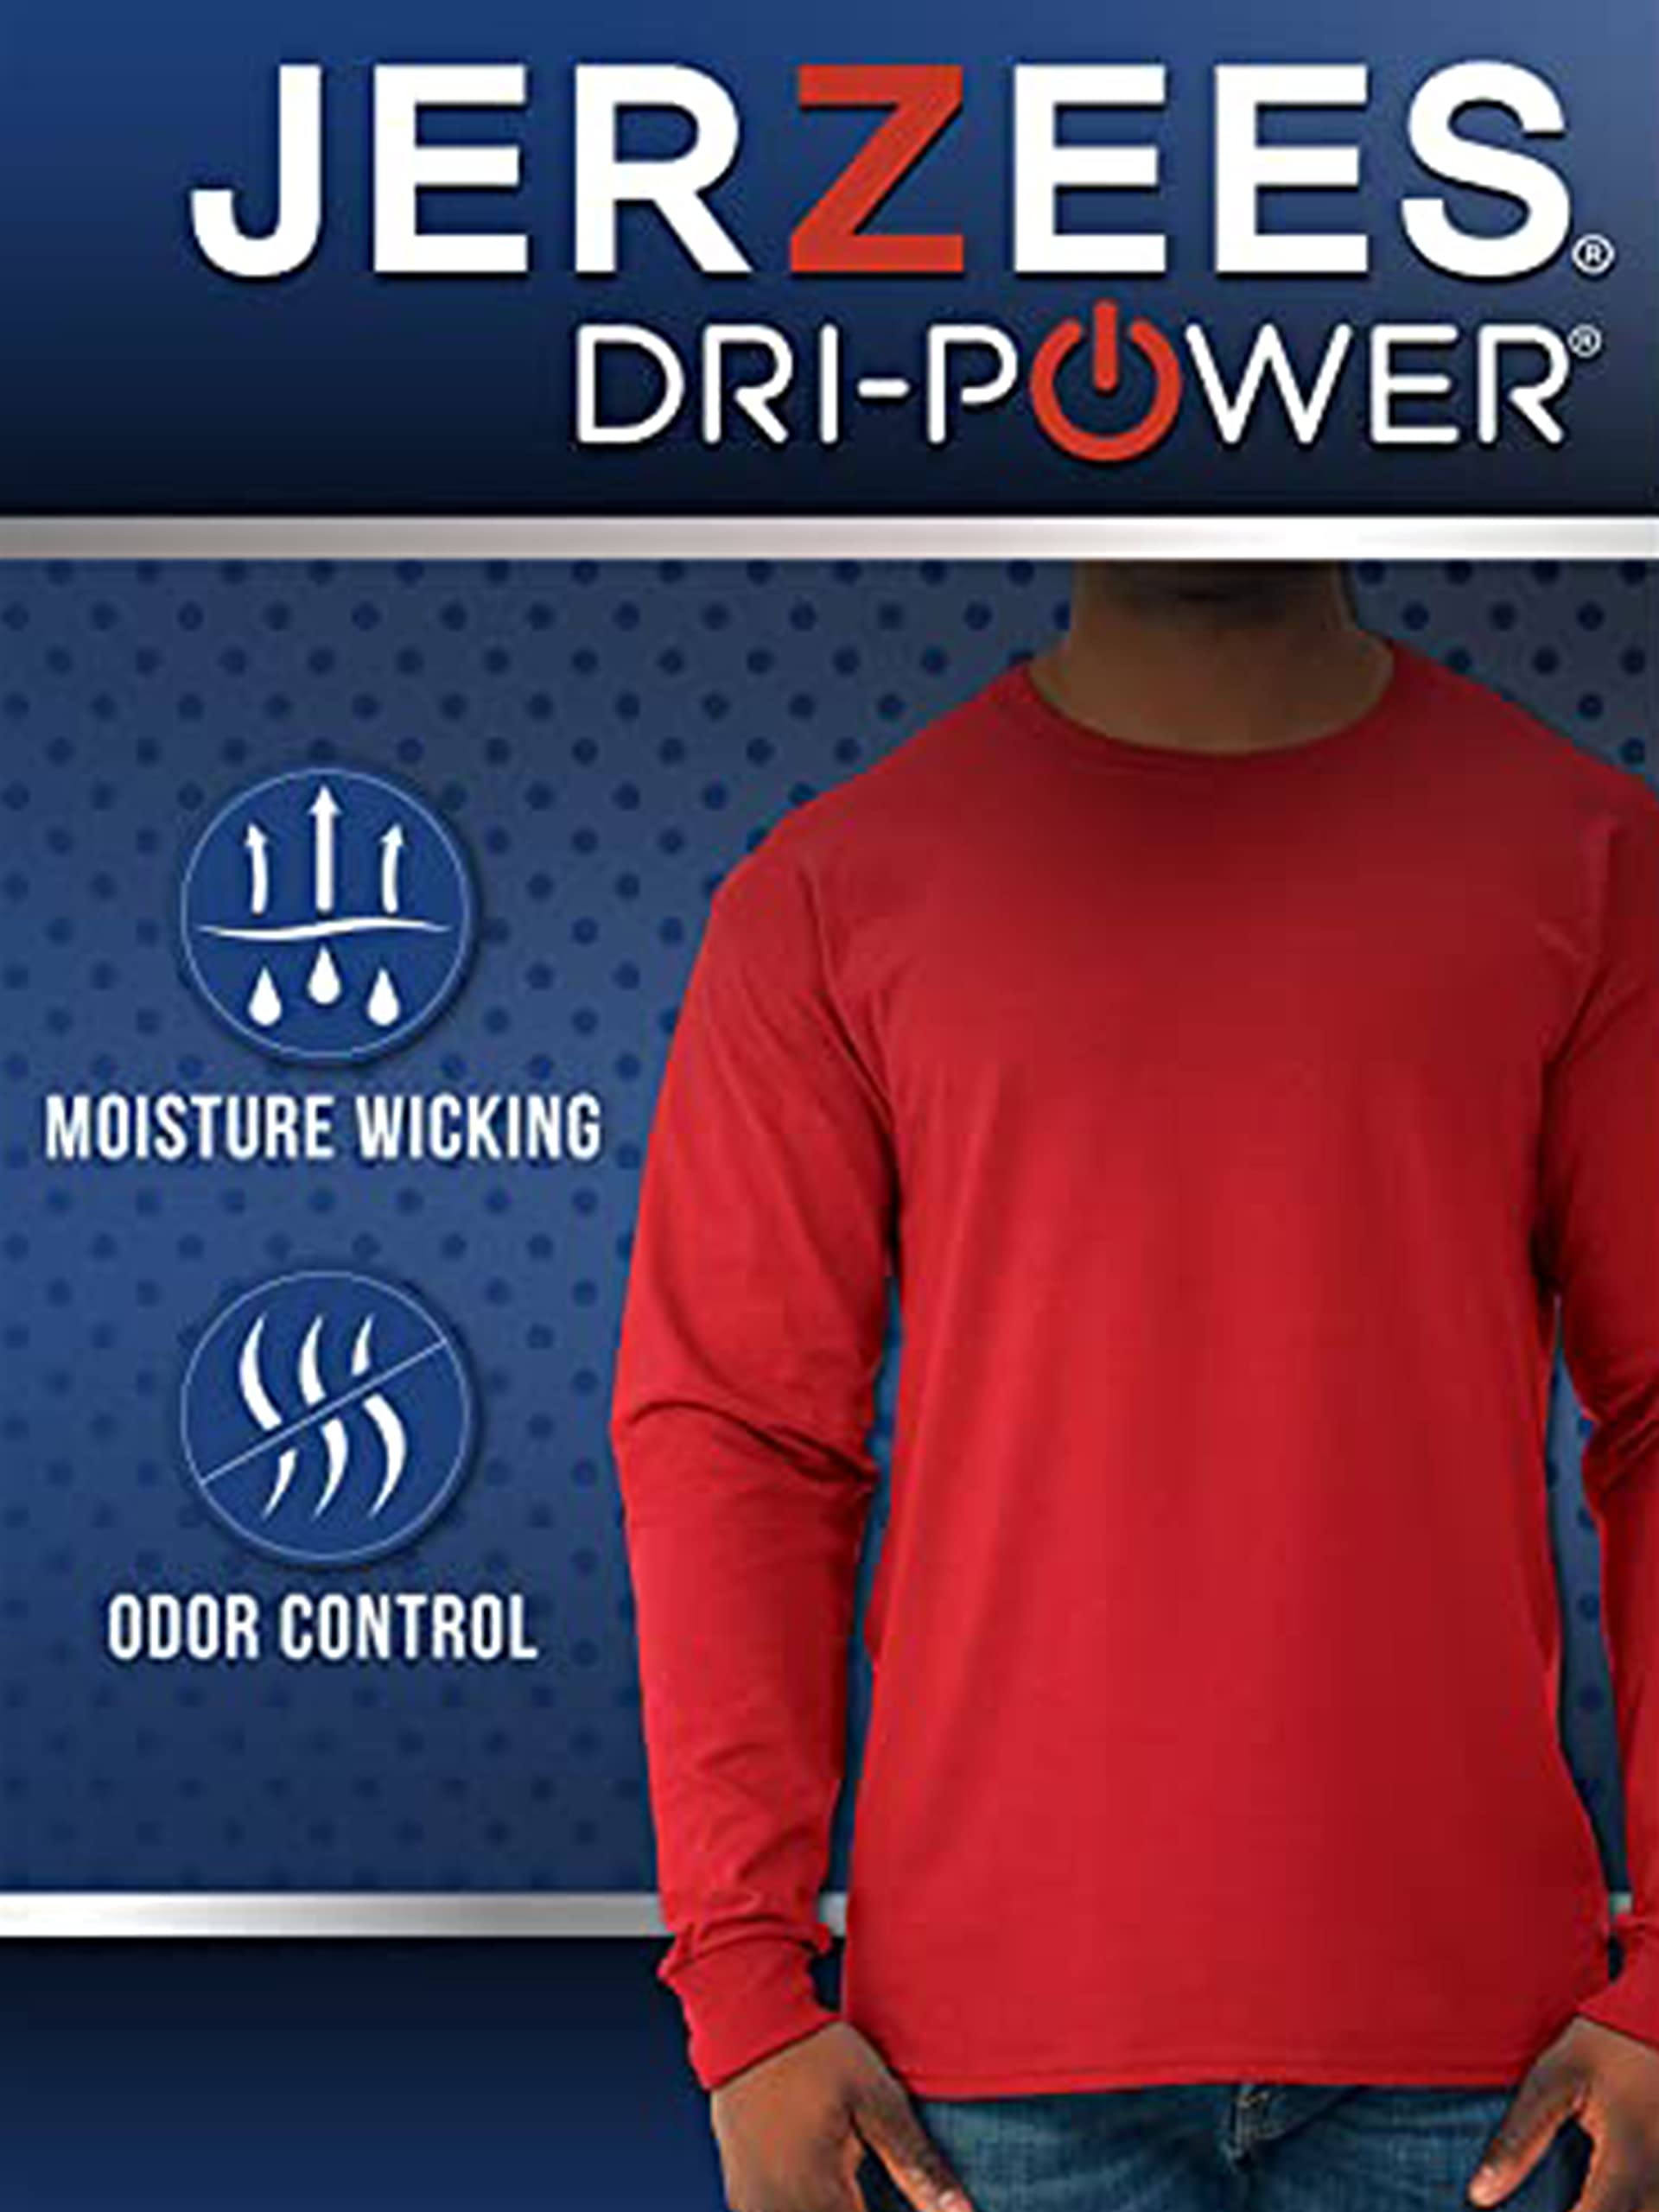 Jerzees Men's Dri-Power Cotton Blend Long Sleeve Tees, Moisture Wicking, Odor Protection, UPF 30+, Sizes S-3x